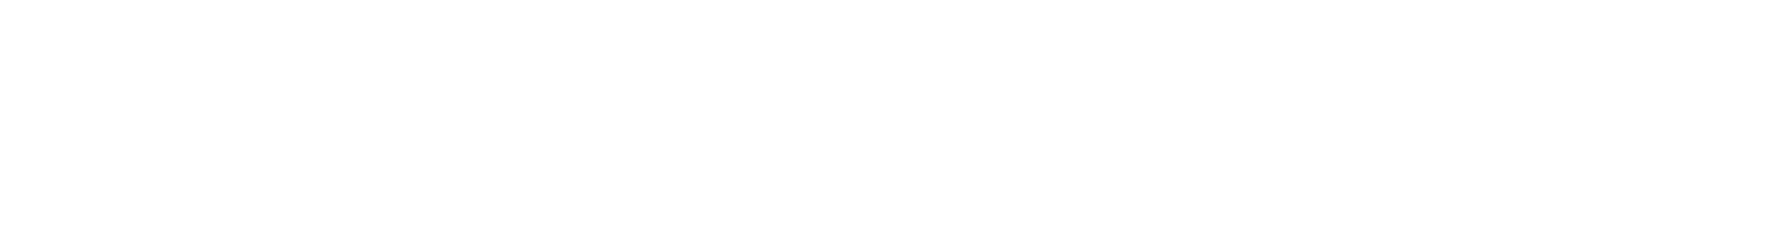 ELATT Resources Logo - White Version